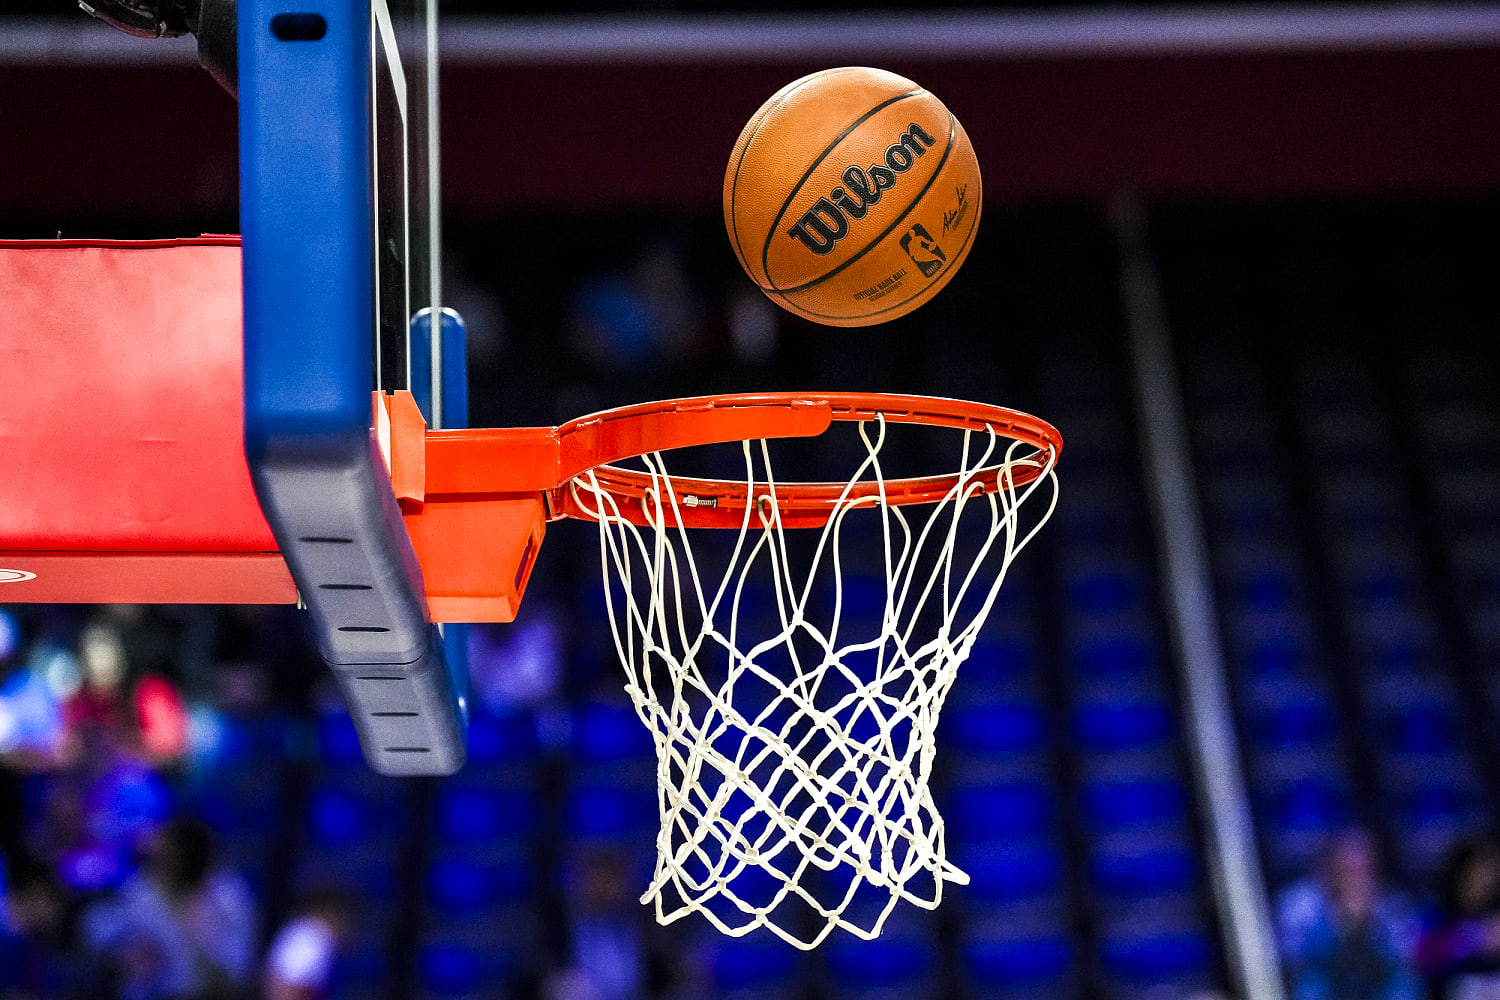 NBC Sports could buy back rights to 'Roundball Rock' if it airs NBA games again, composer John Tesh says